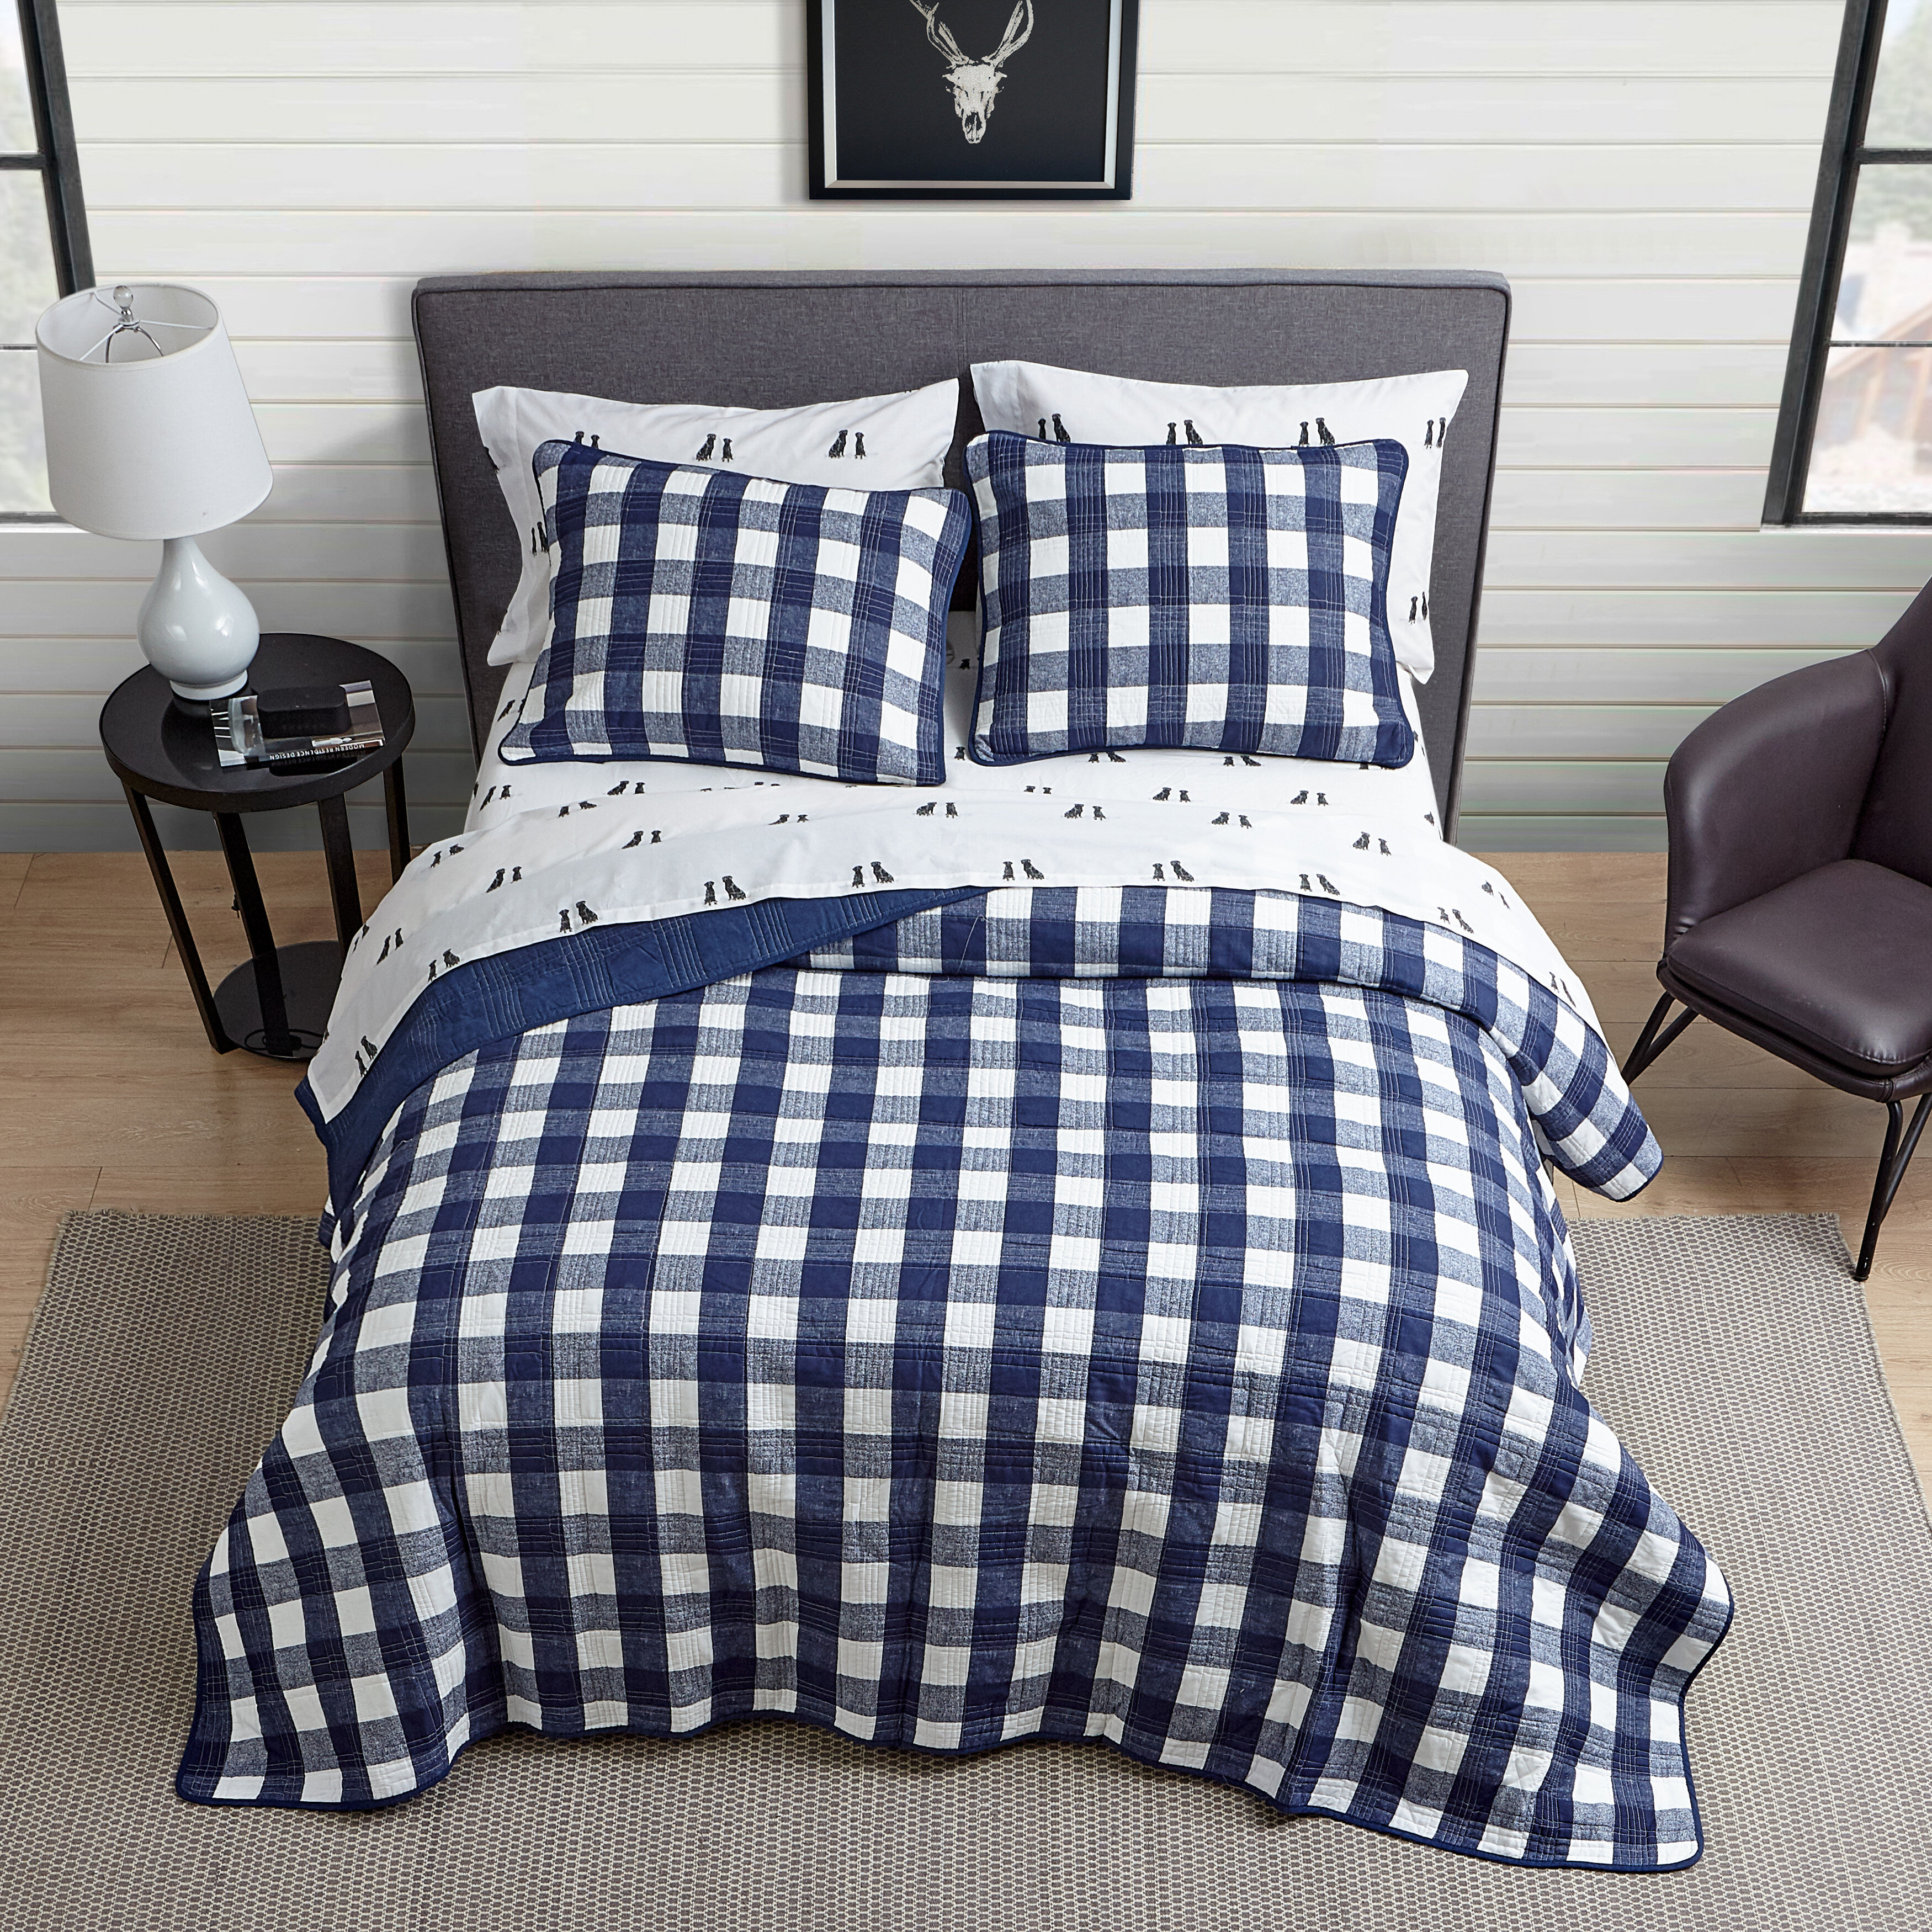 Details about   Queen Quilt Set Comforter Bedding Bed Cover Reversible Tan Blue Plaid Pattern 